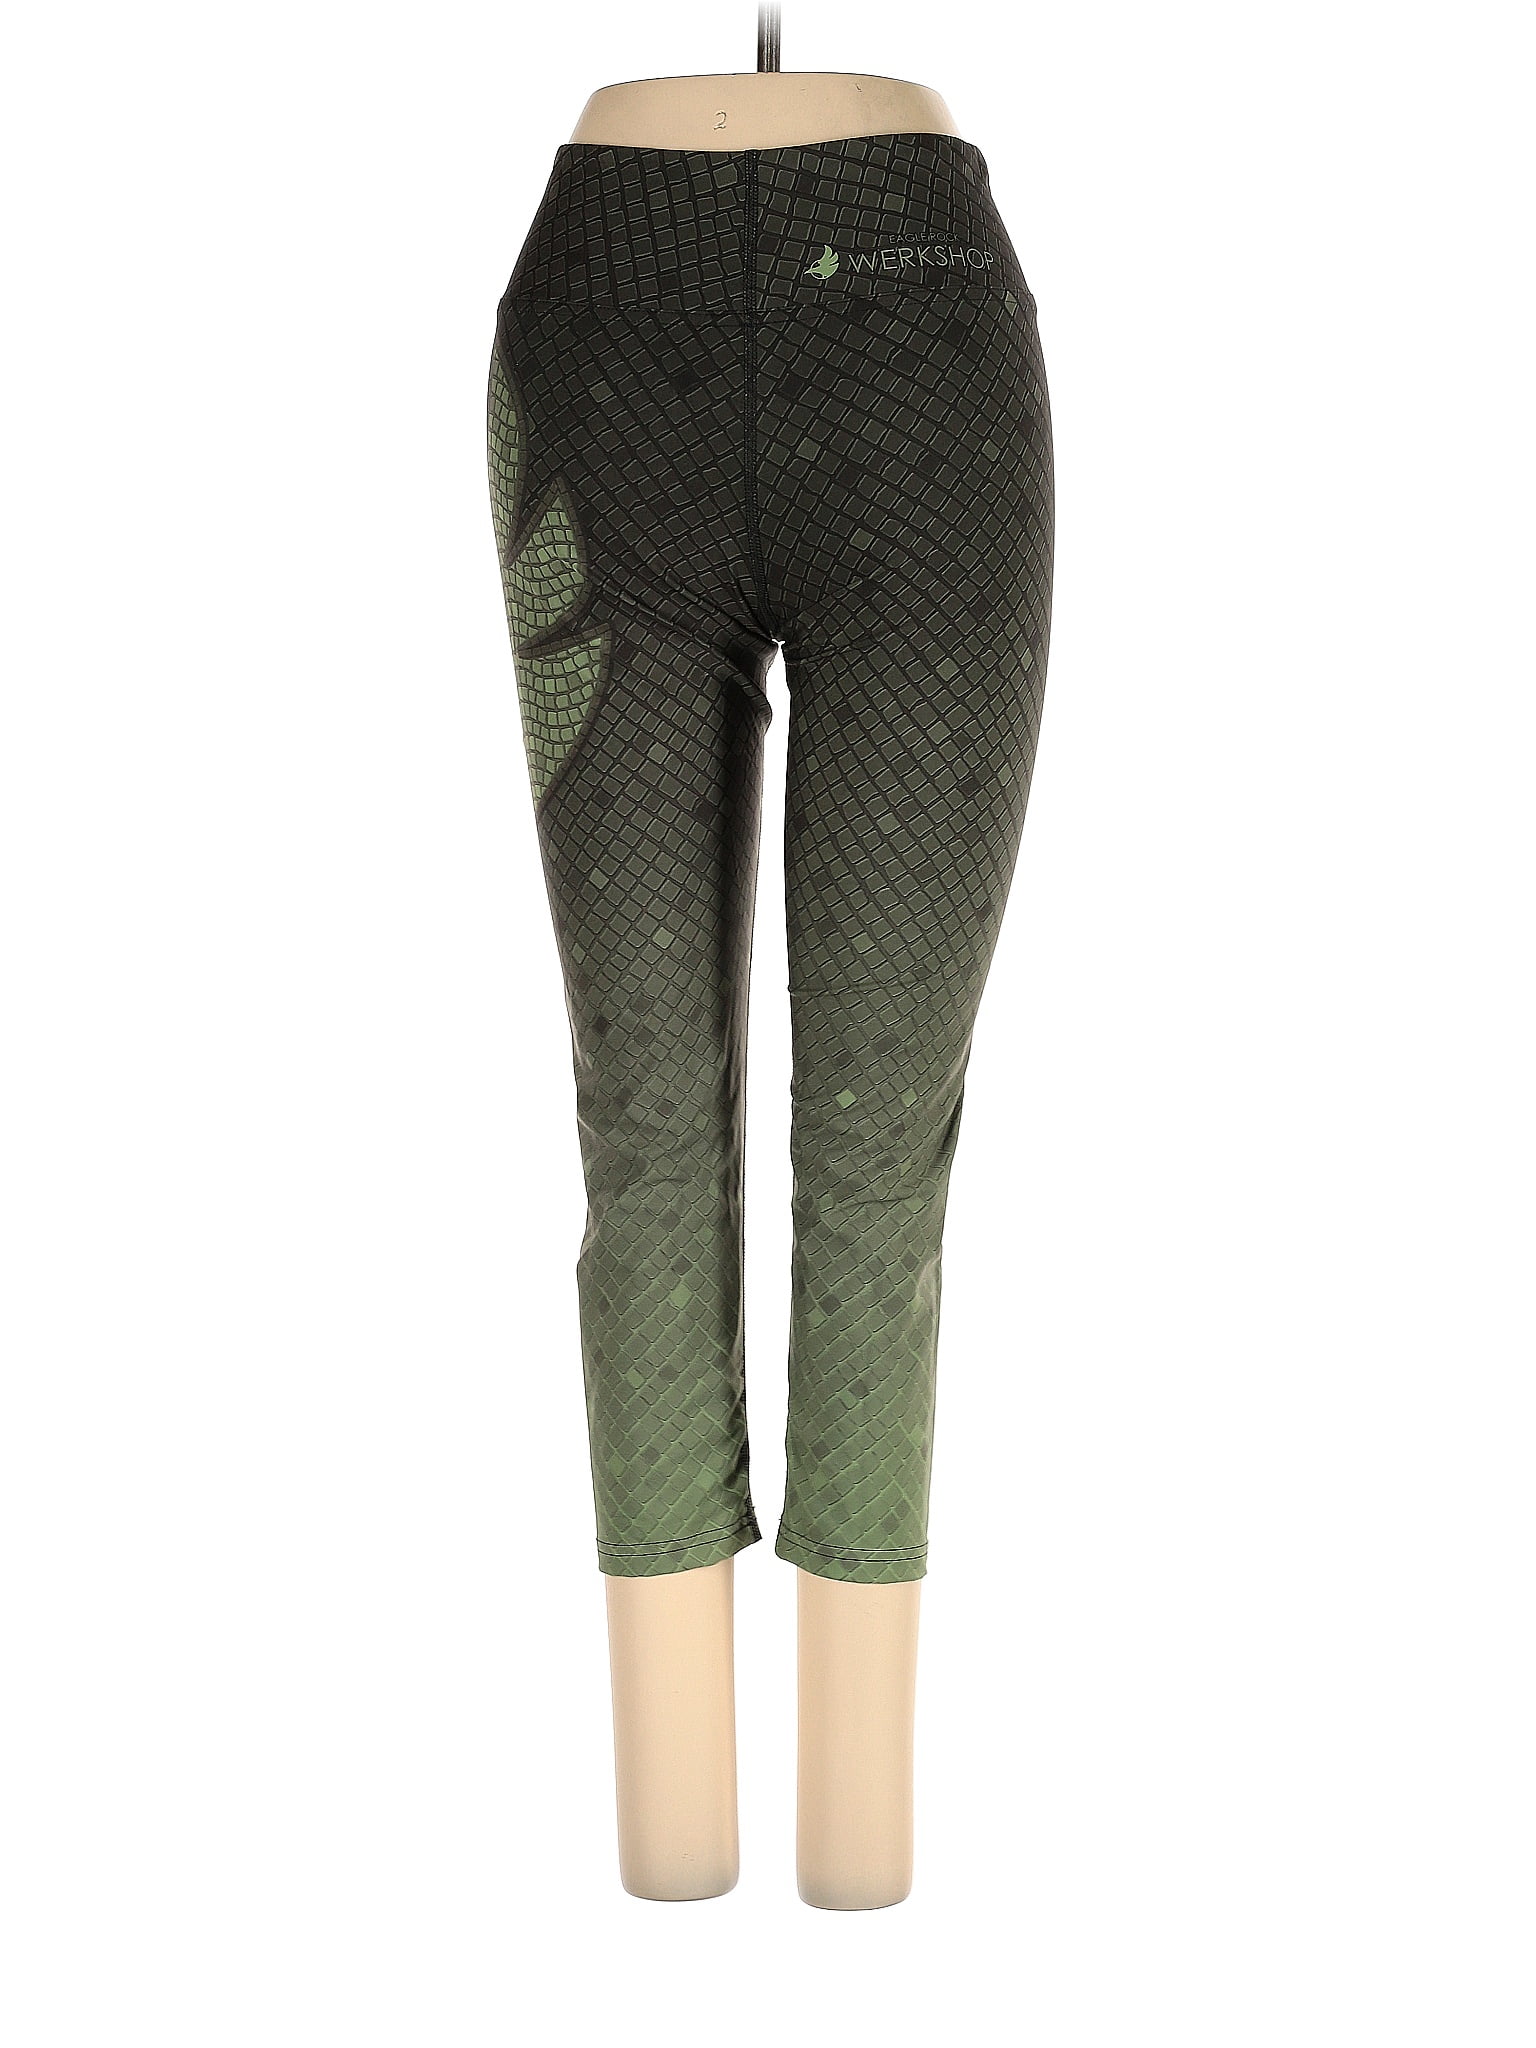 EAGLE ROCK WERKSHOP Green Active Pants Size S - 70% off